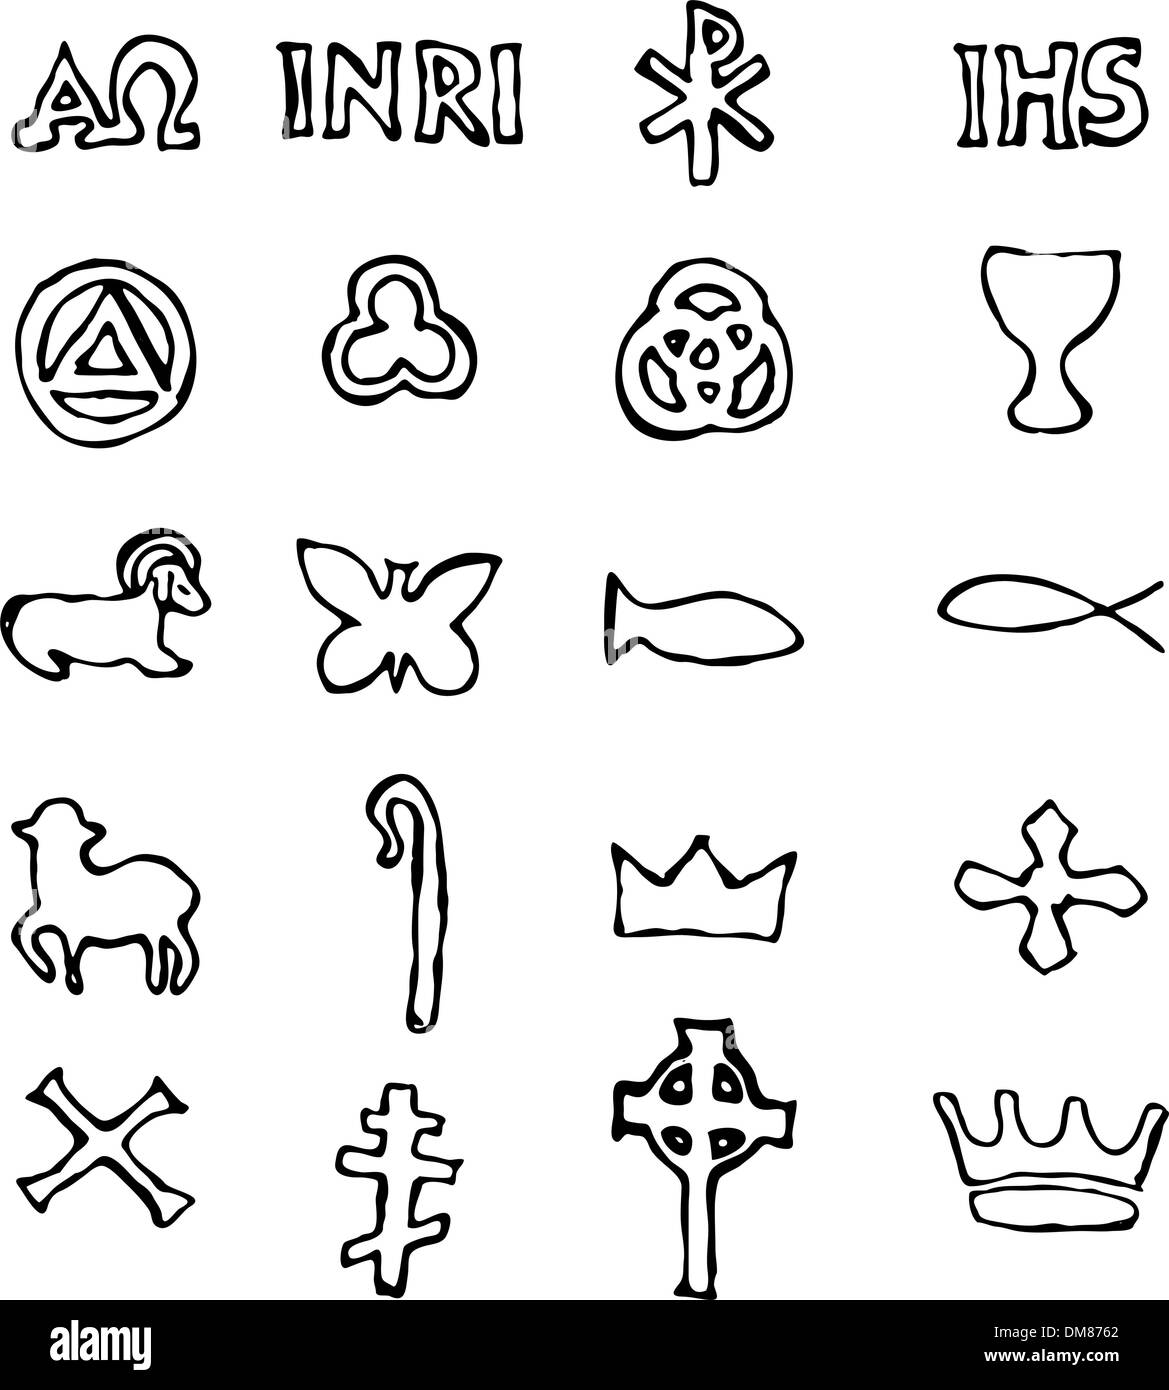 8 Ancient Christian Symbols ideas | christian symbols, symbols, christian